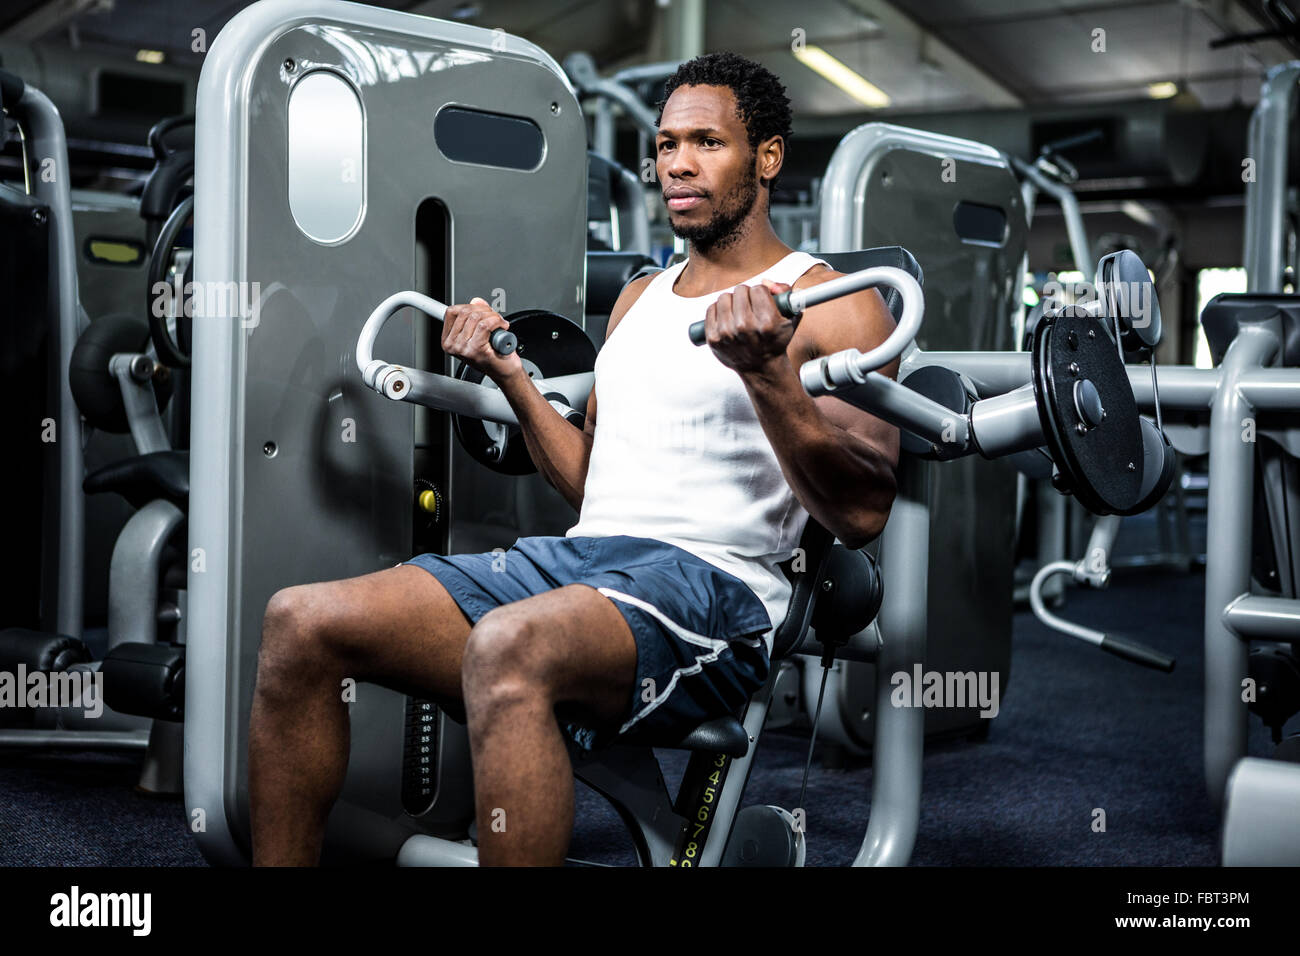 Serious muscular man using exercise machine Stock Photo